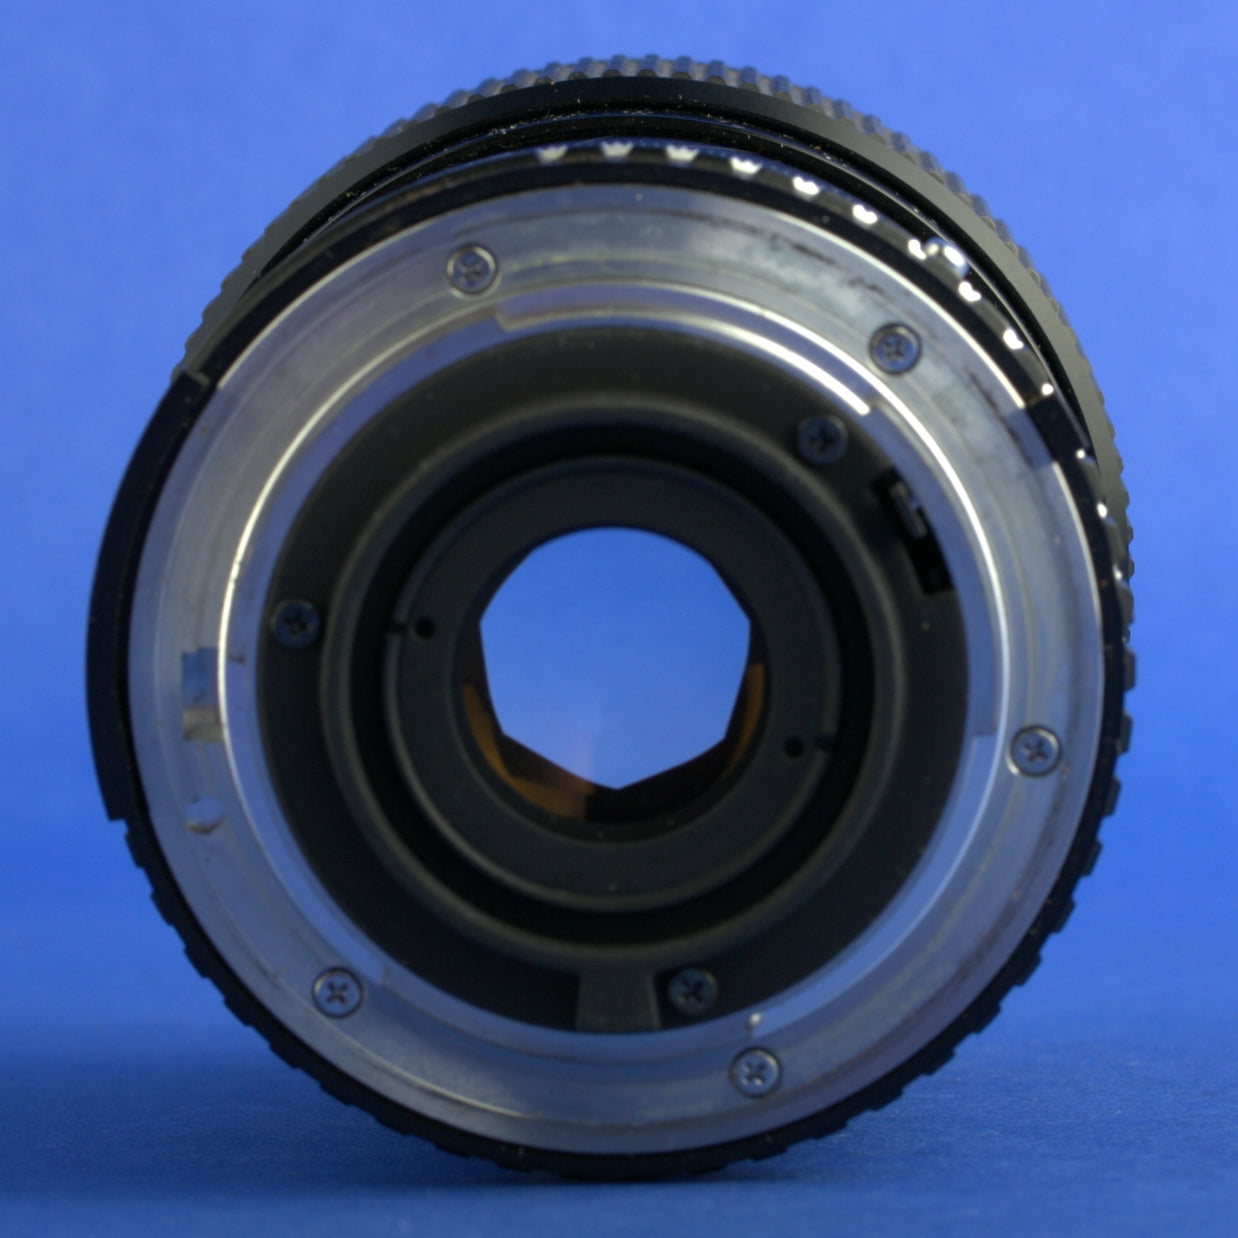 Nikon Zoom-Nikkor 36-72mm 3.5 Series E Lens